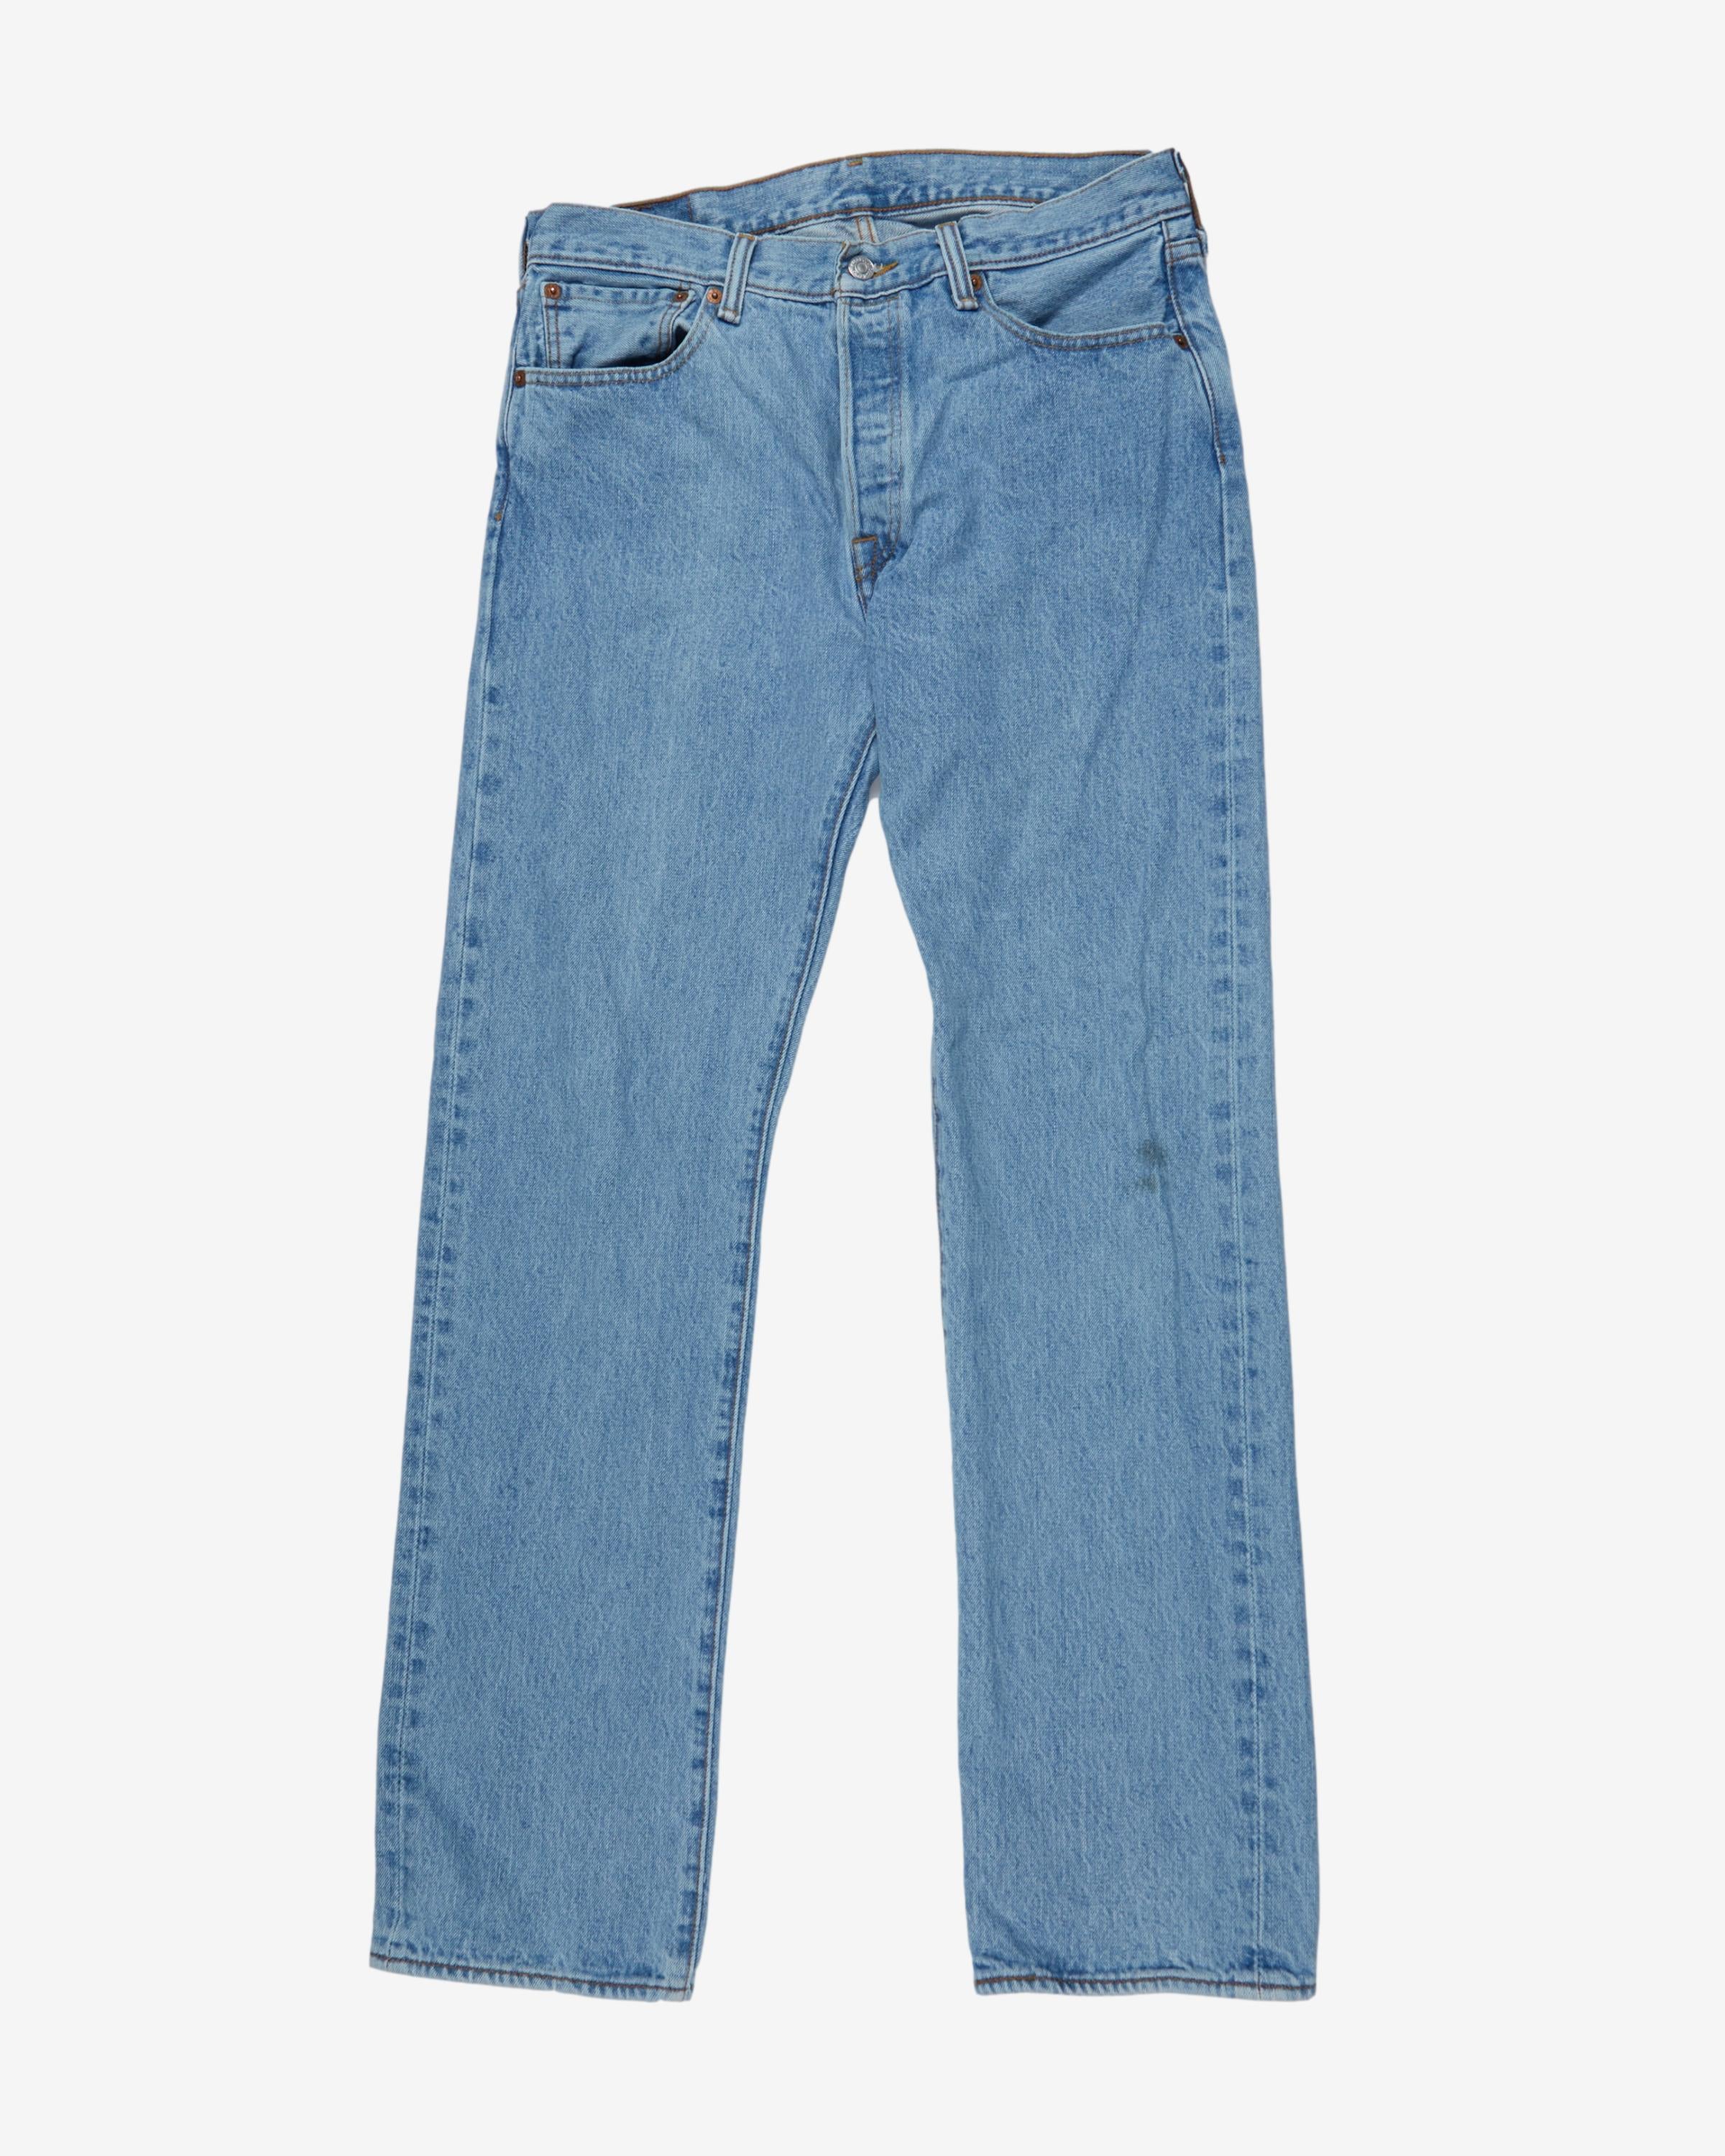 Levi's 501 Light Blue Denim Jeans - W34 L31